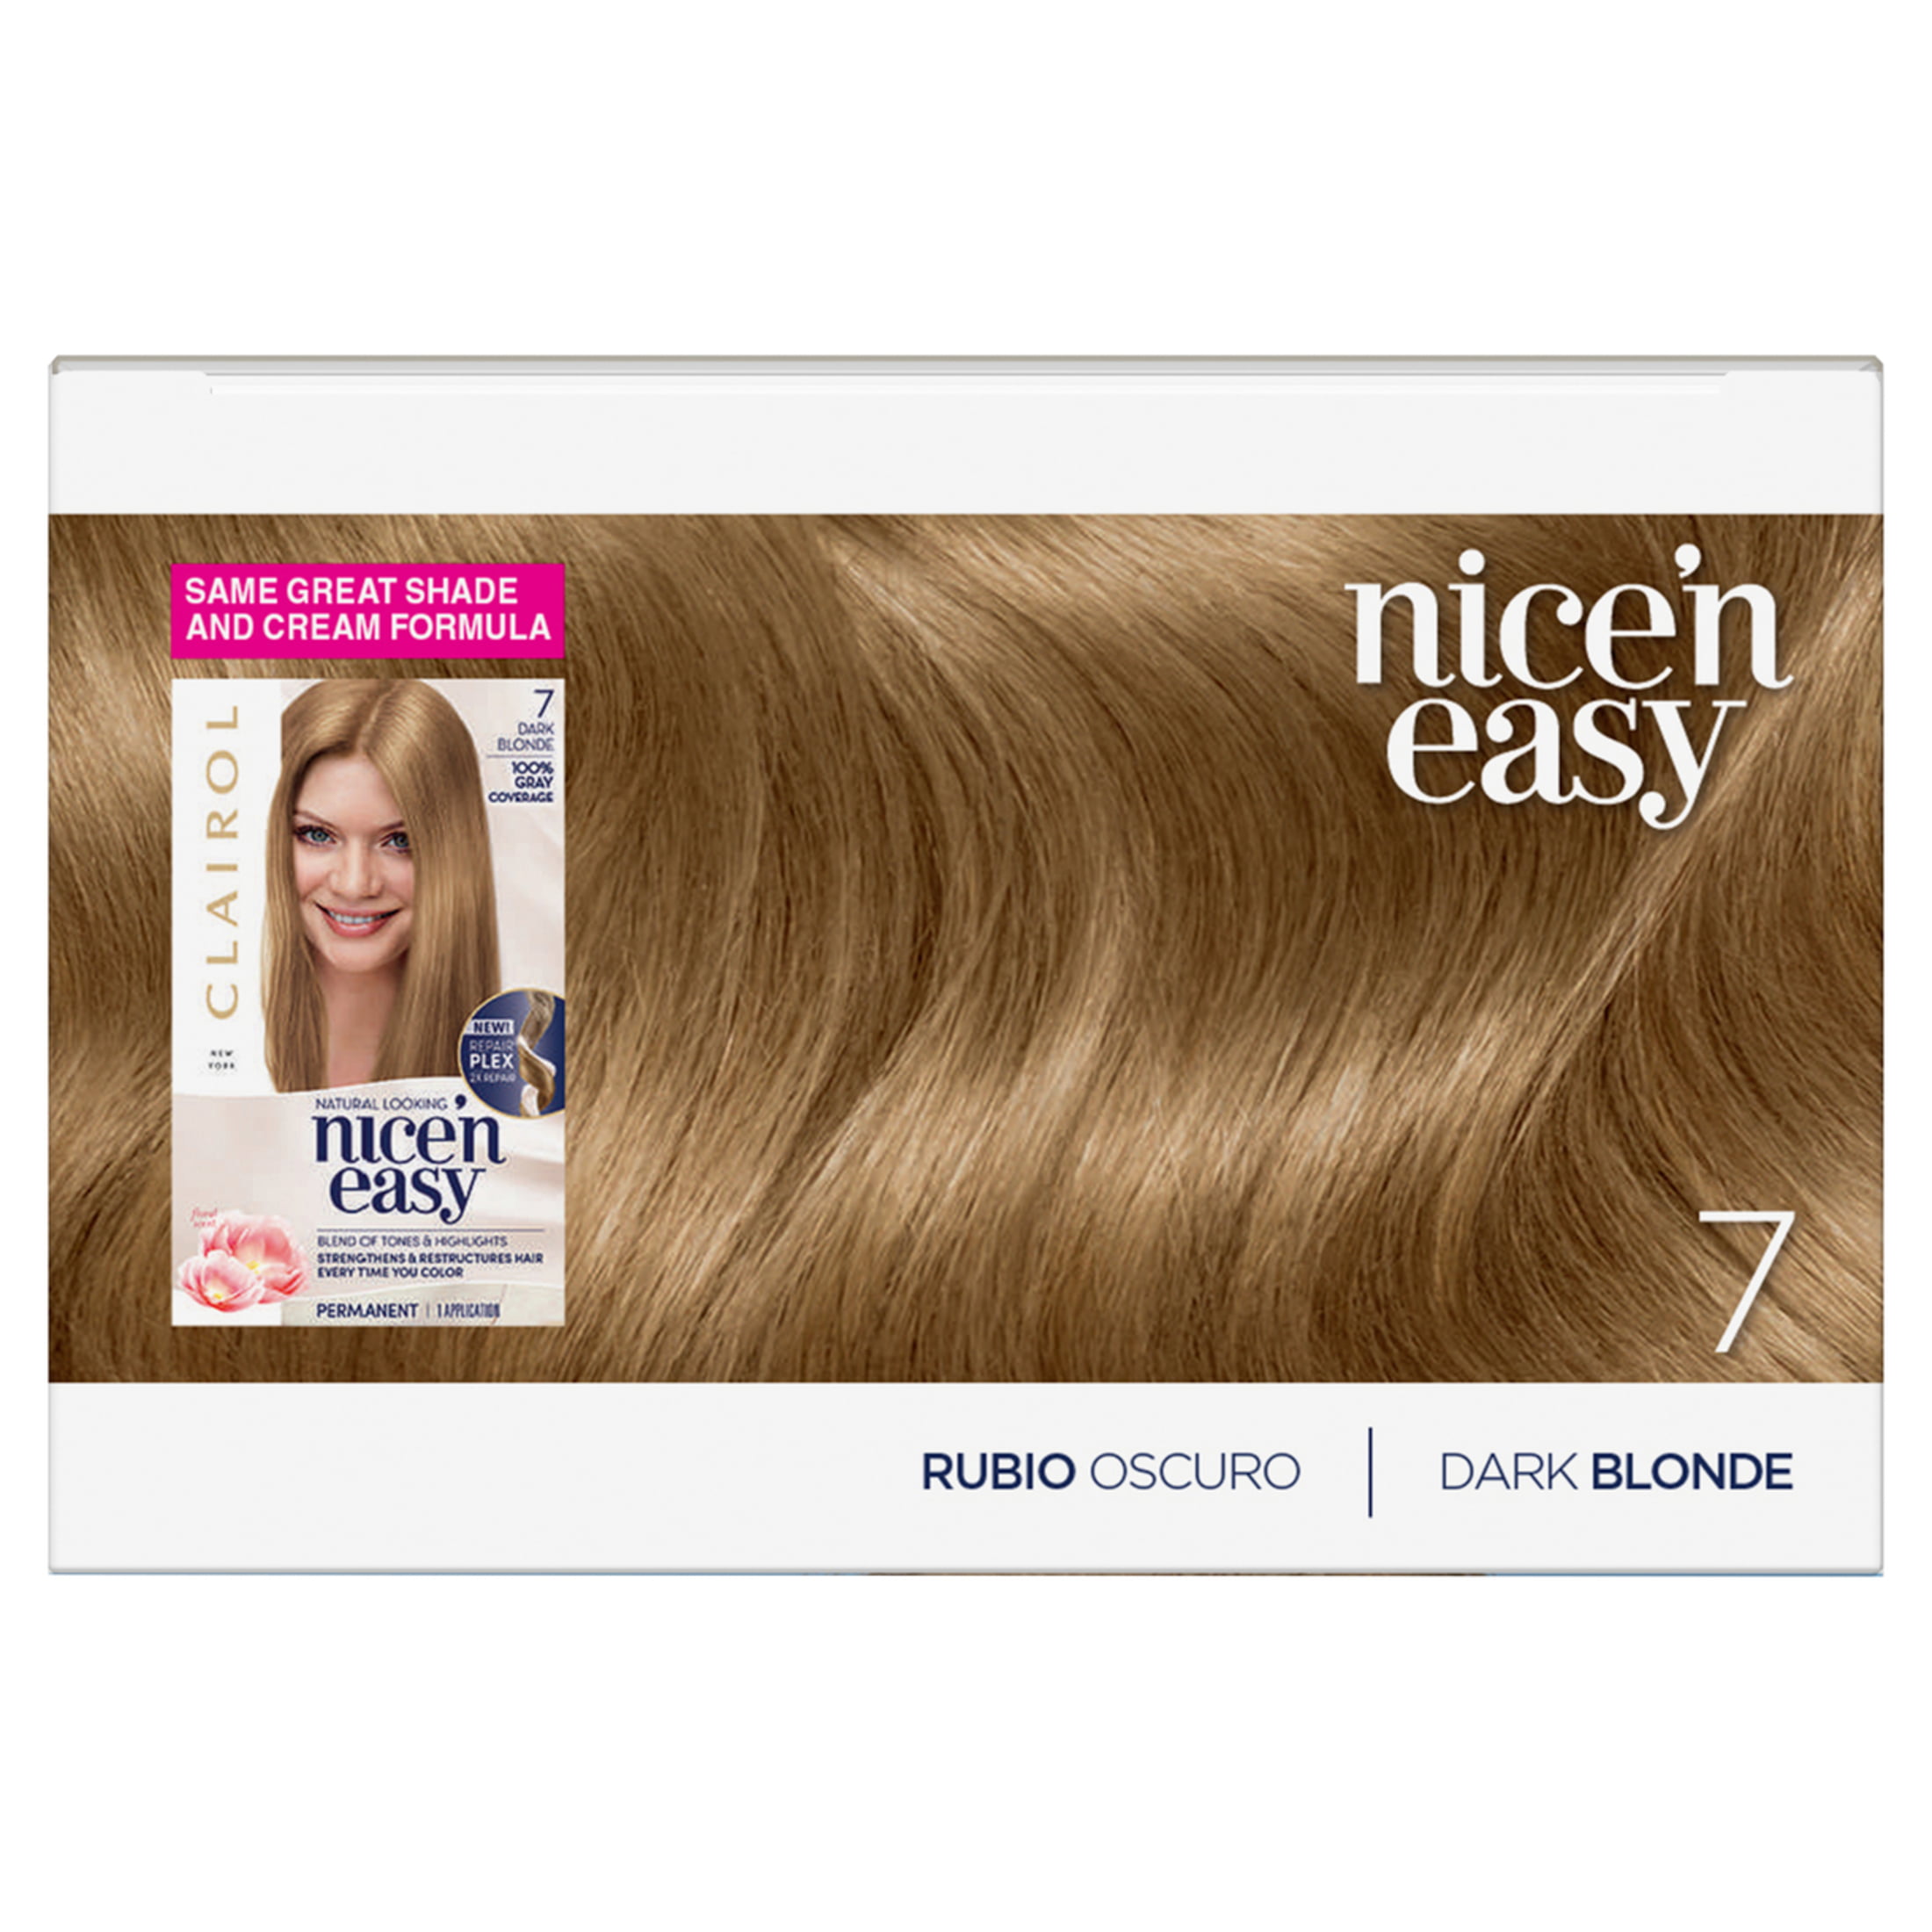 Clairol Nice'n Easy Permanent Hair Color Creme, 7 Dark Blonde, 1  Application, Hair Dye 